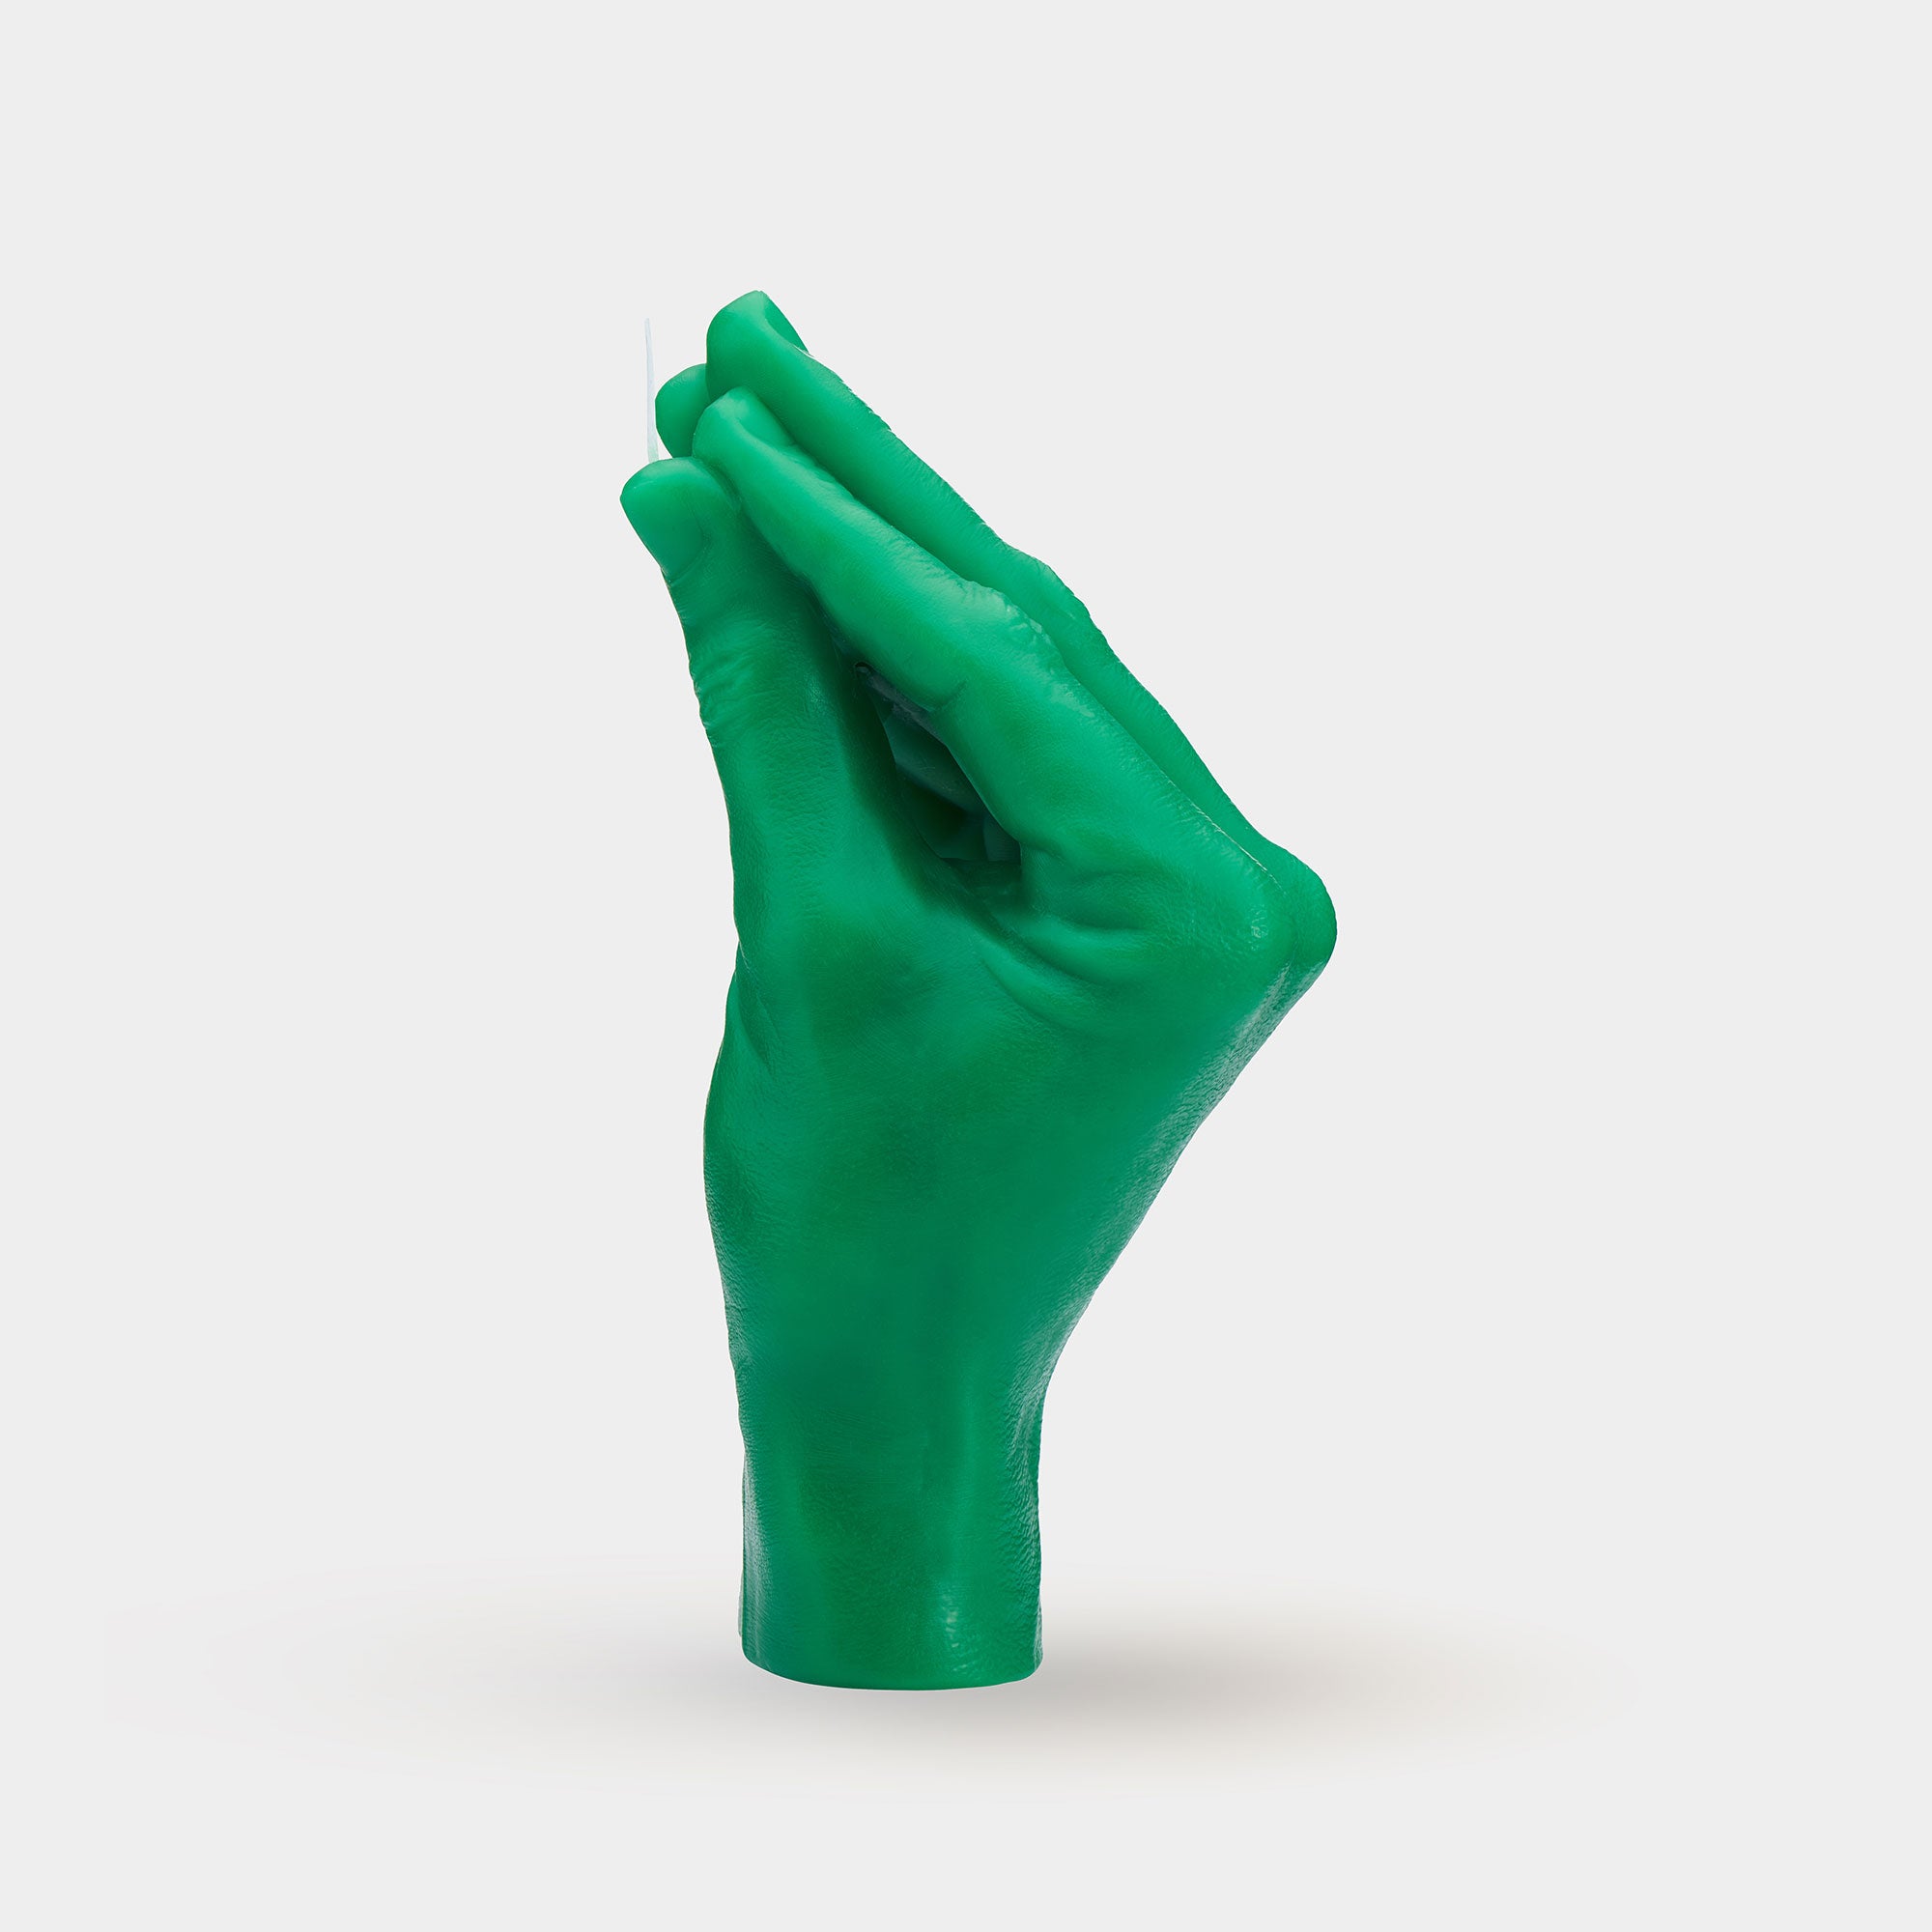 CandleHand "Italian Gesture" Green